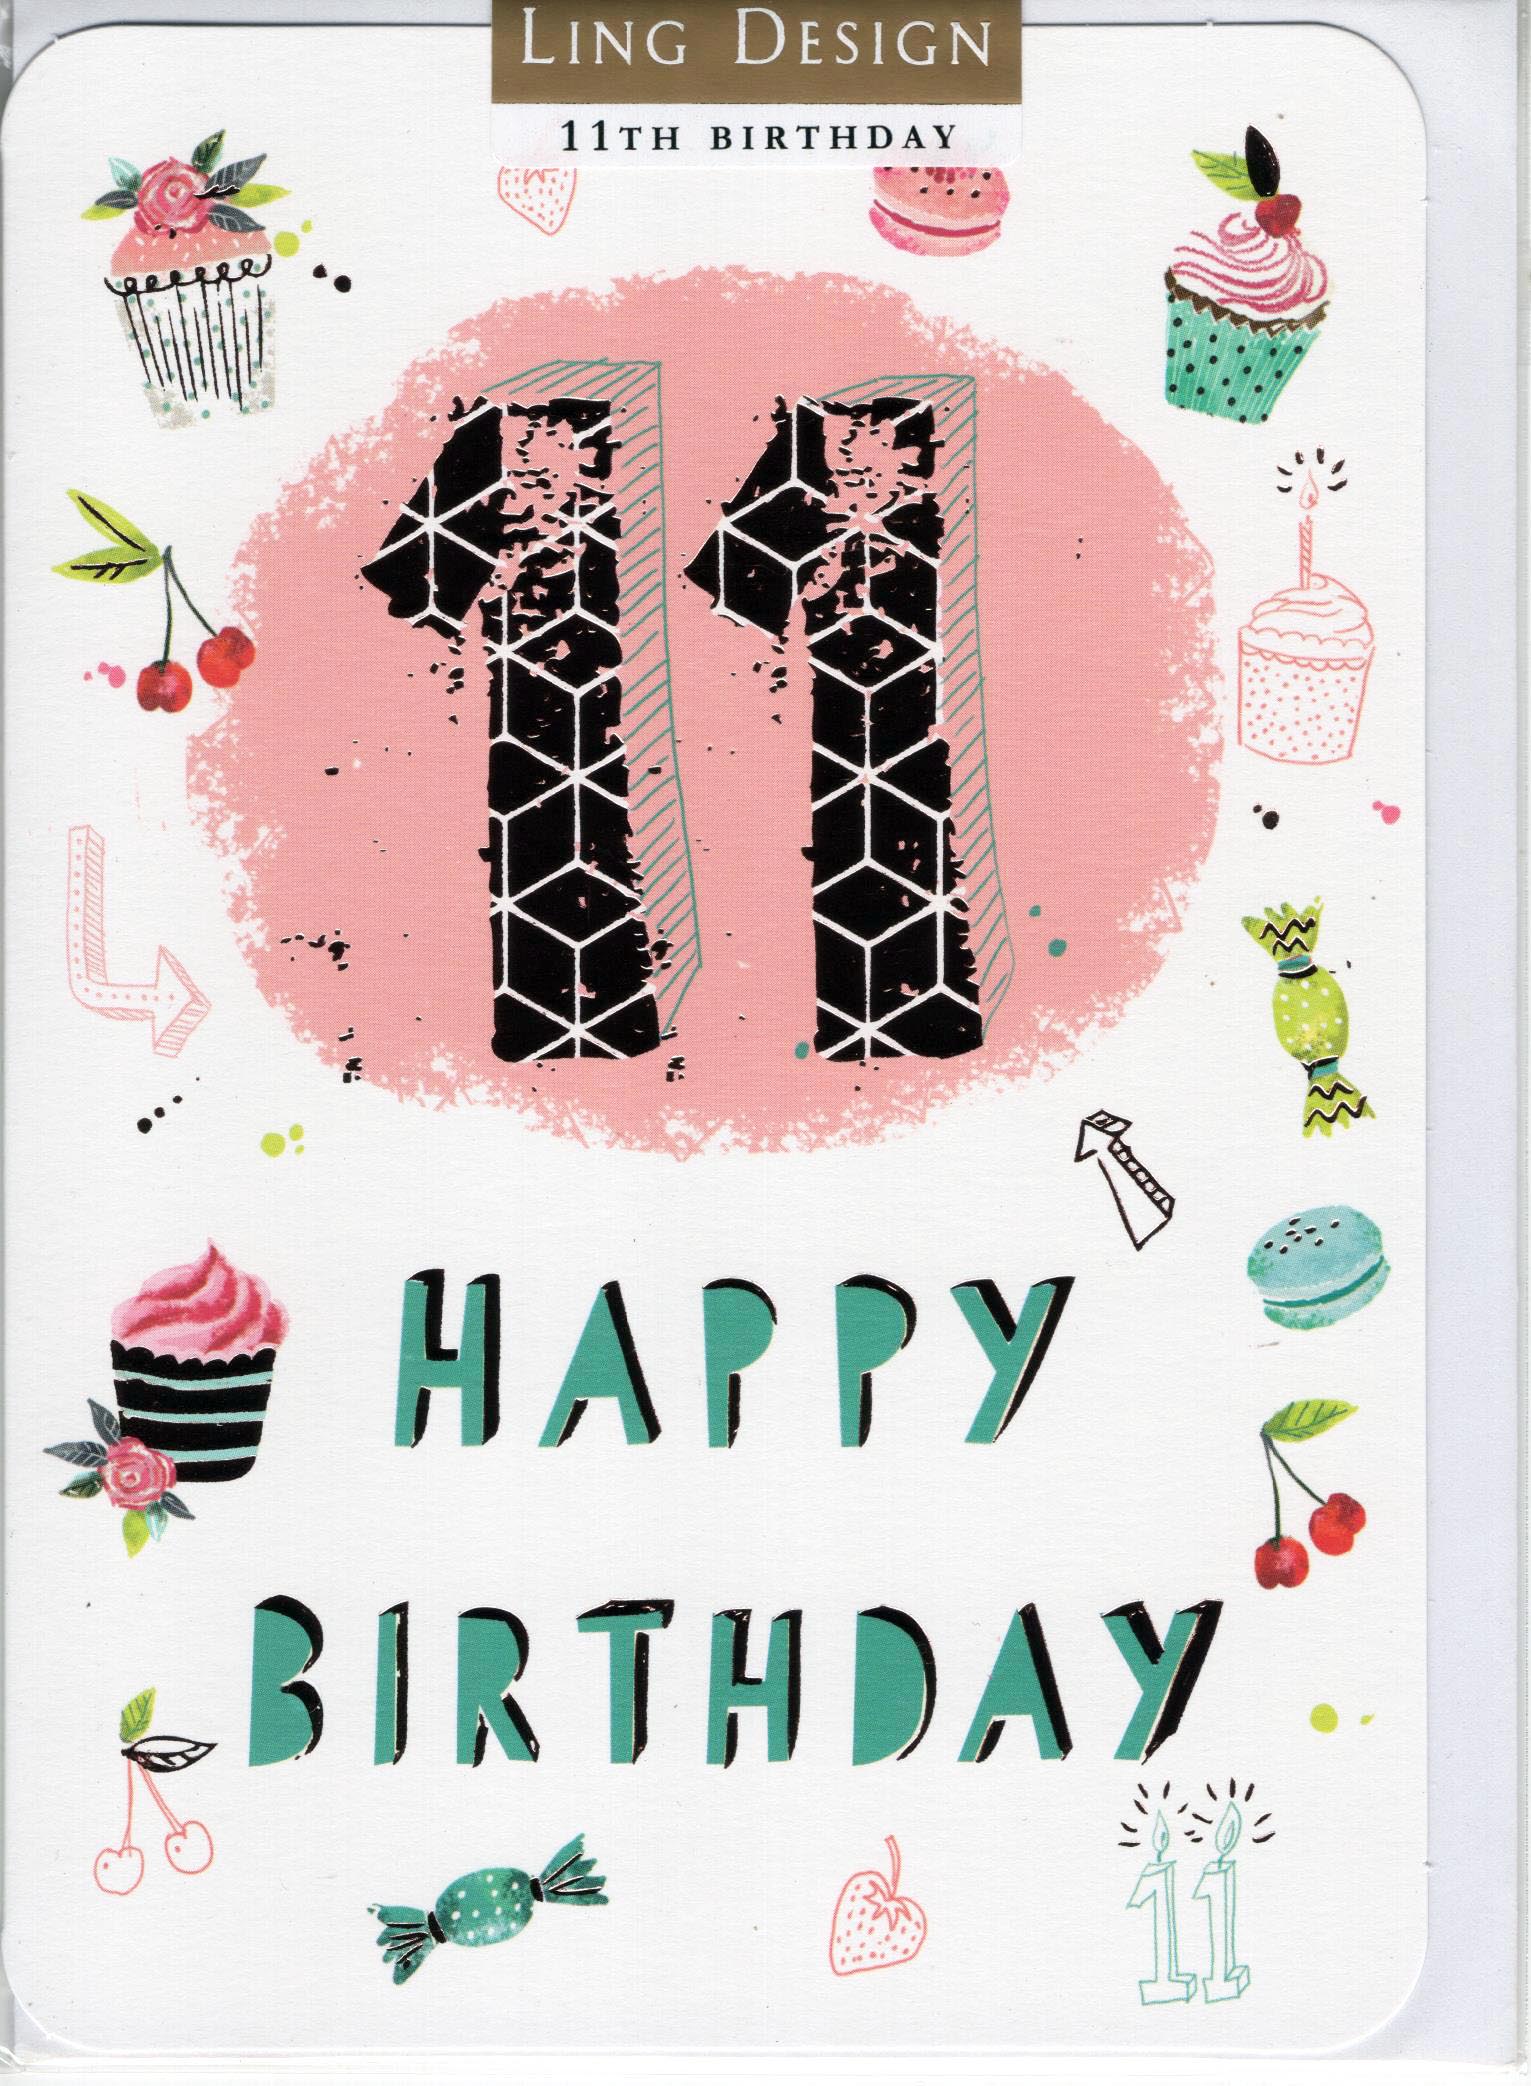 Happy Birthday 11 Greeting Card